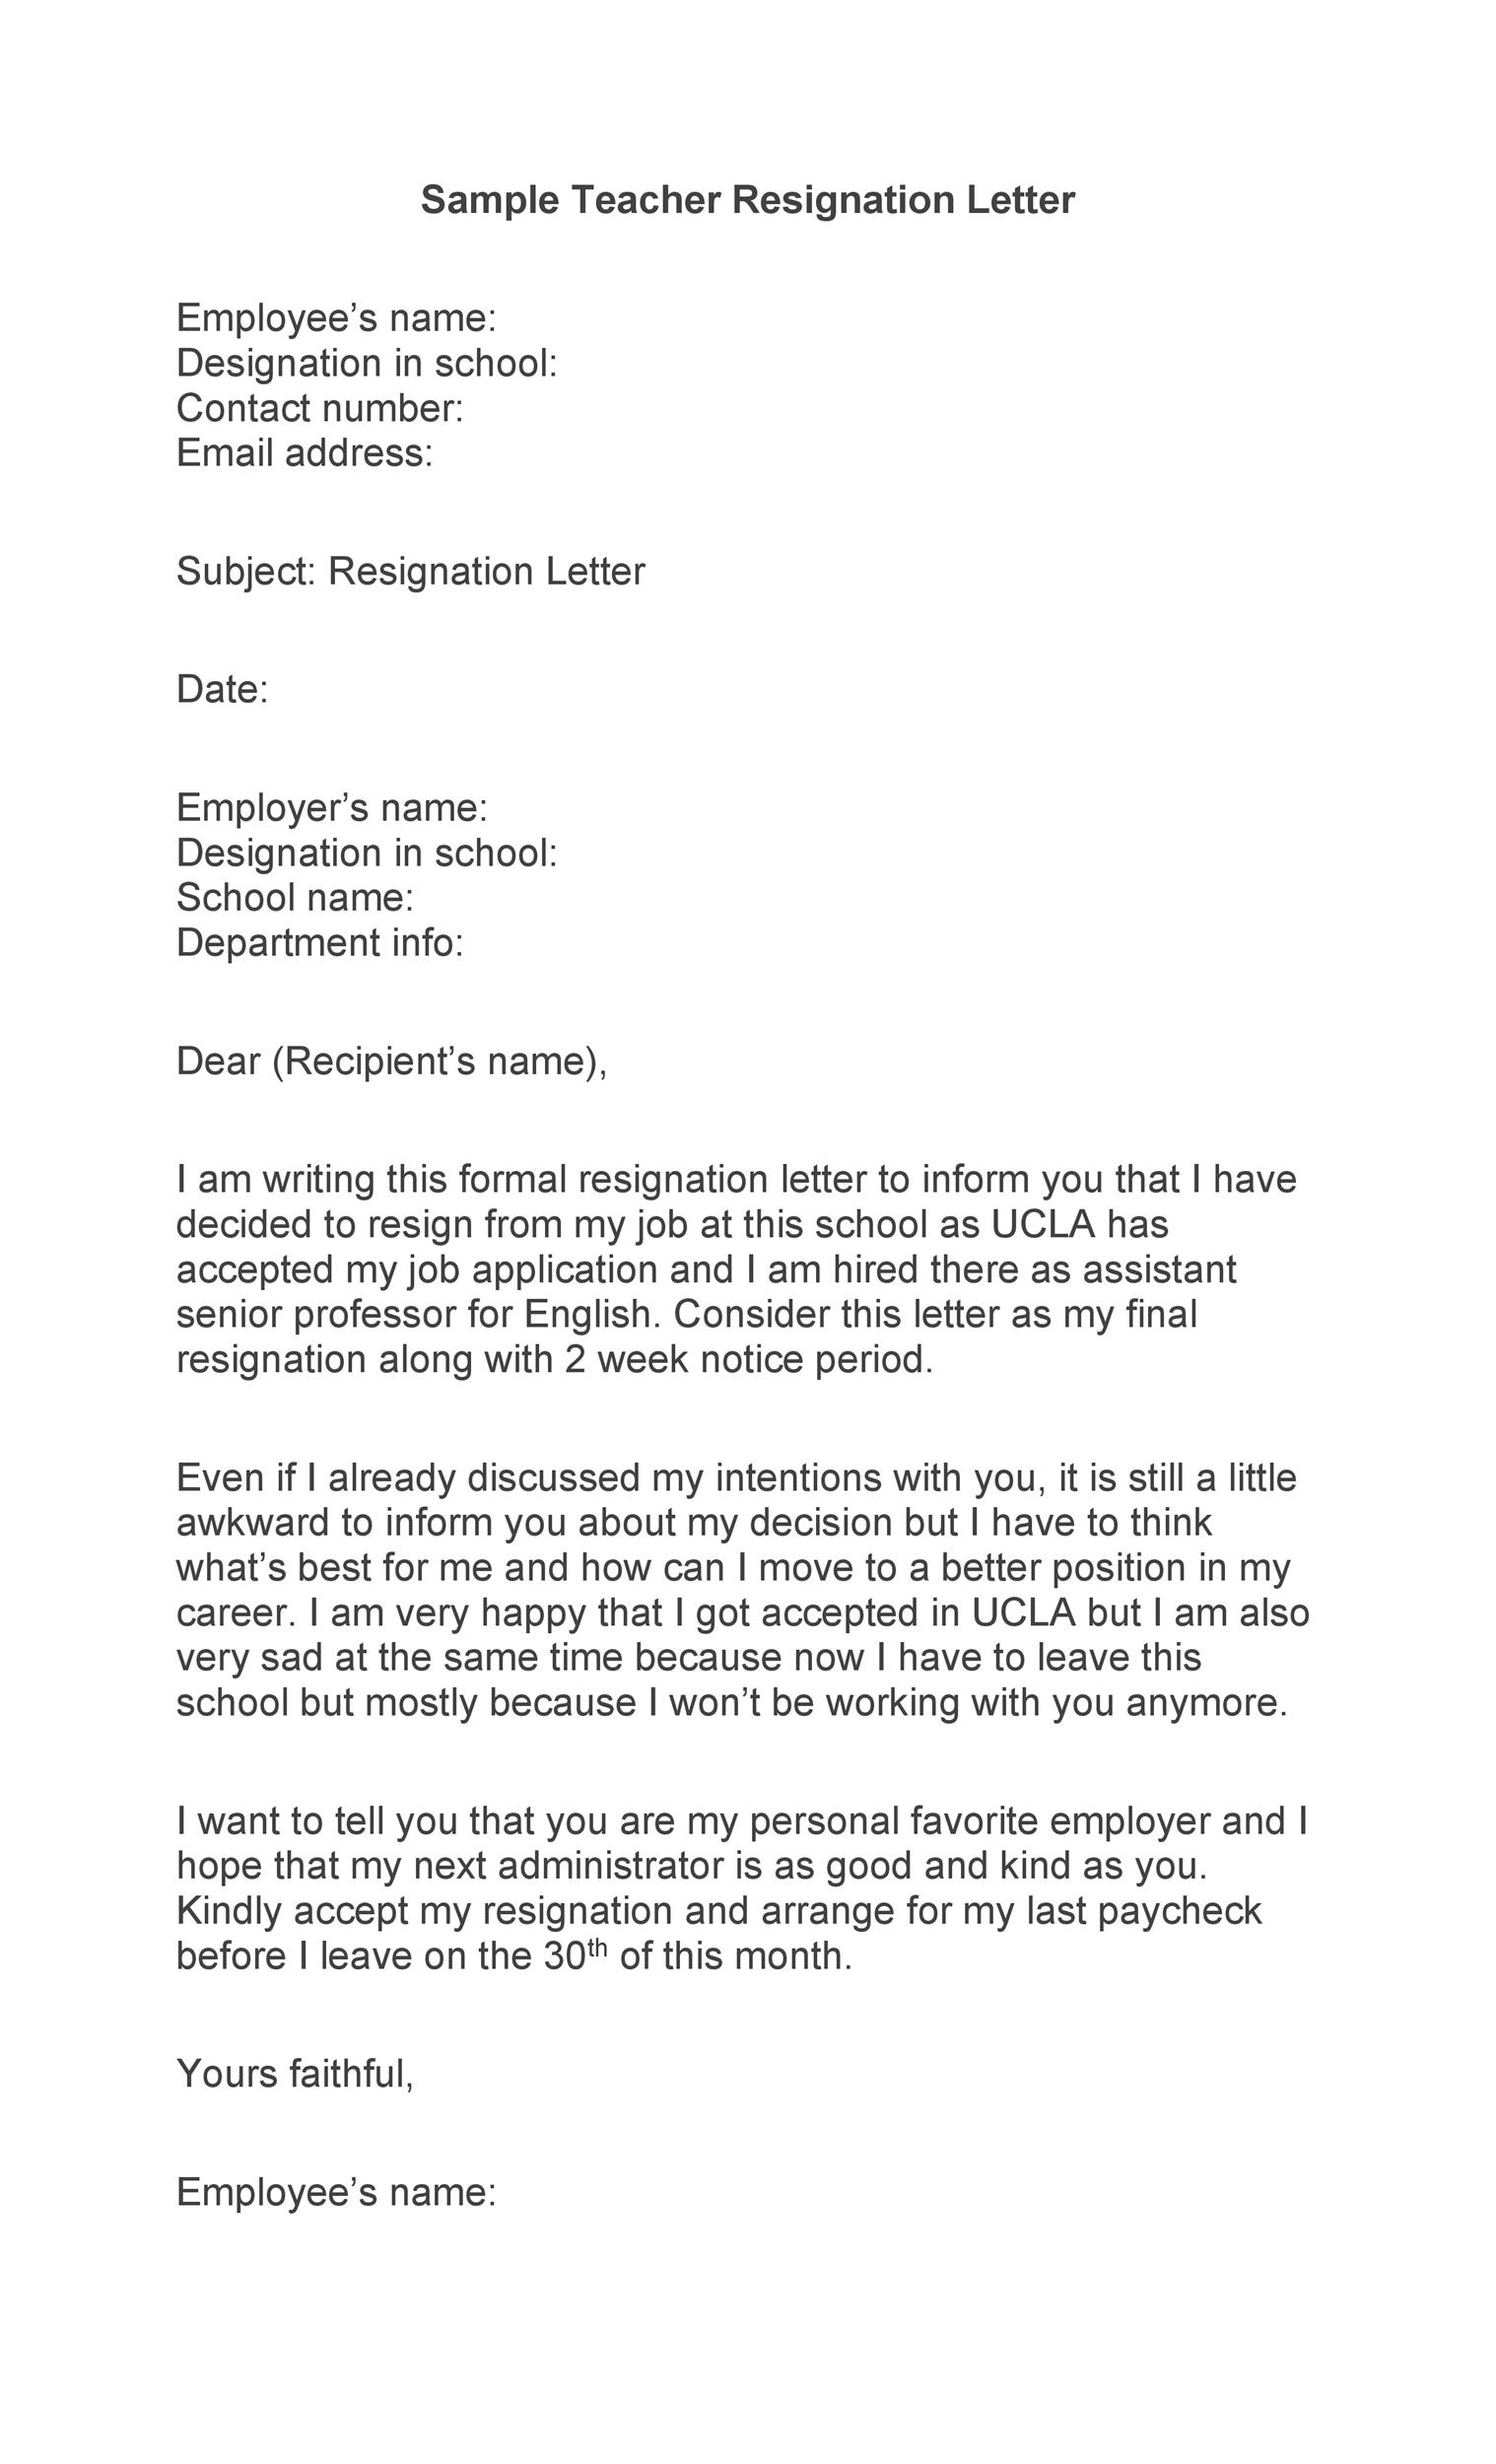 Letter For A Teacher from templatelab.com